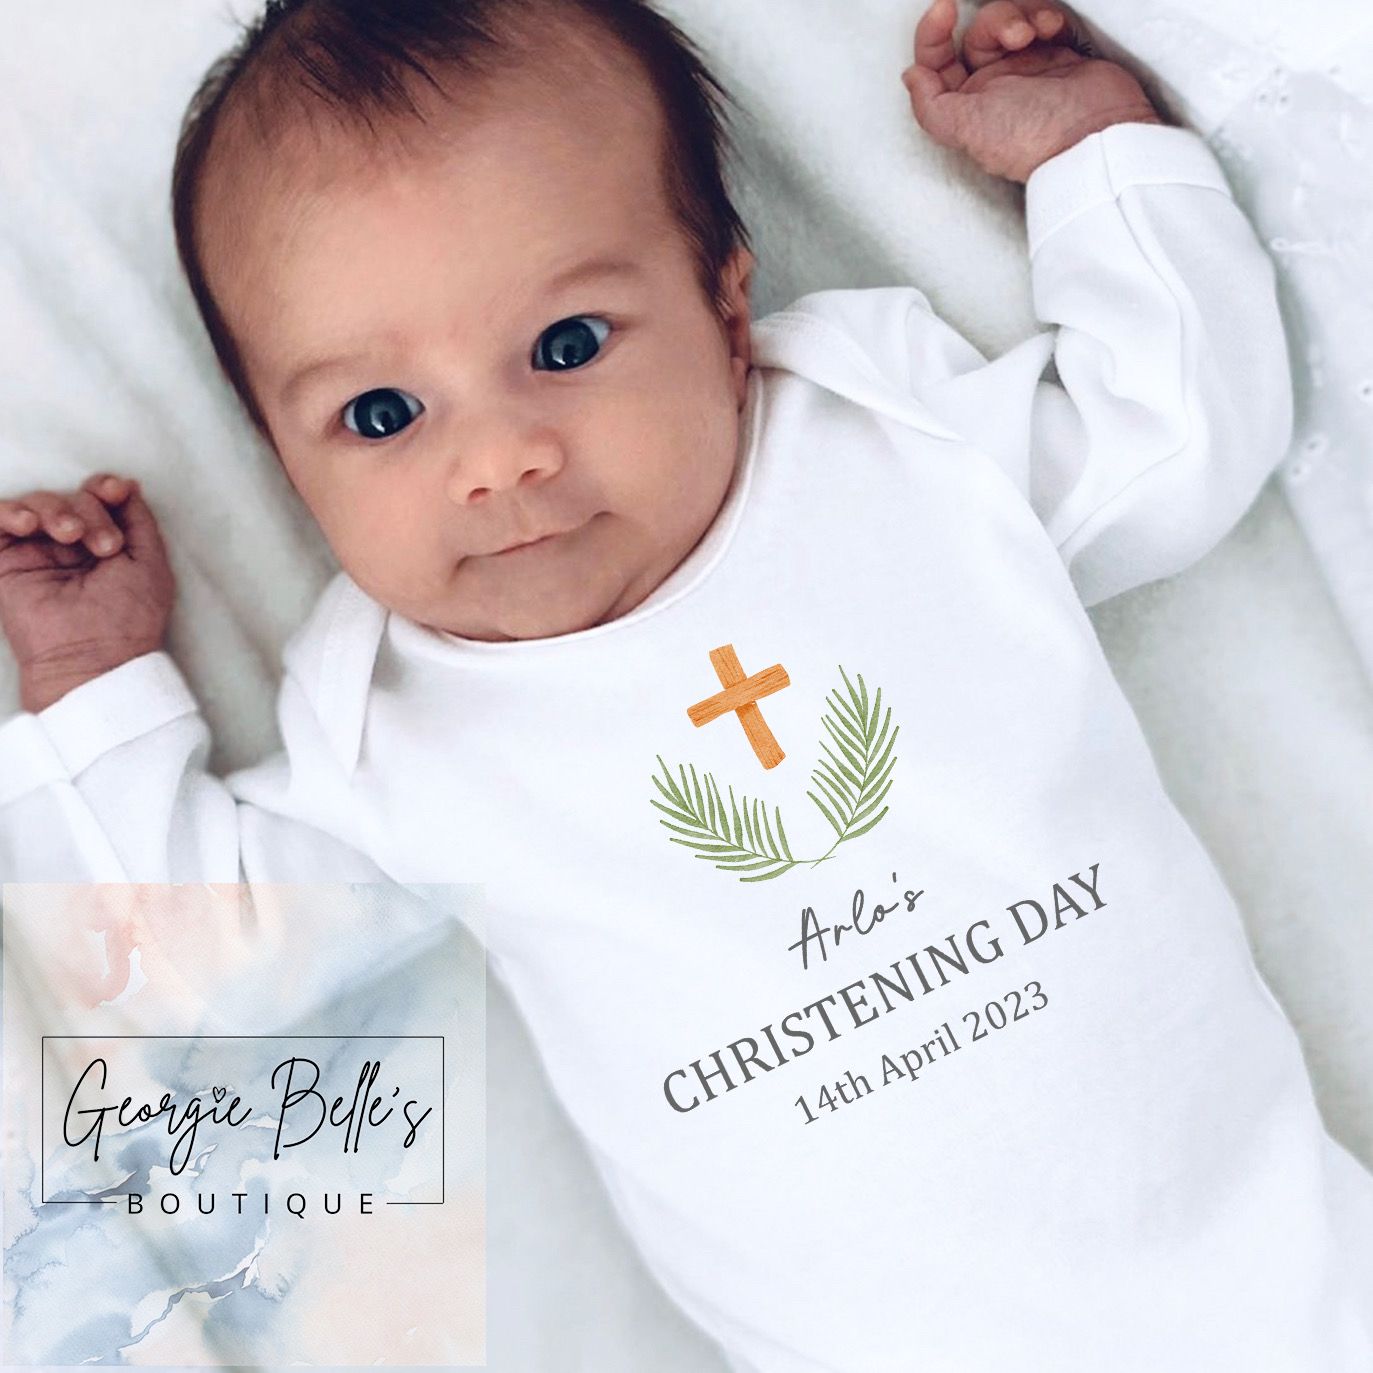 Christening Baby Gift Set - Classic Cross Design